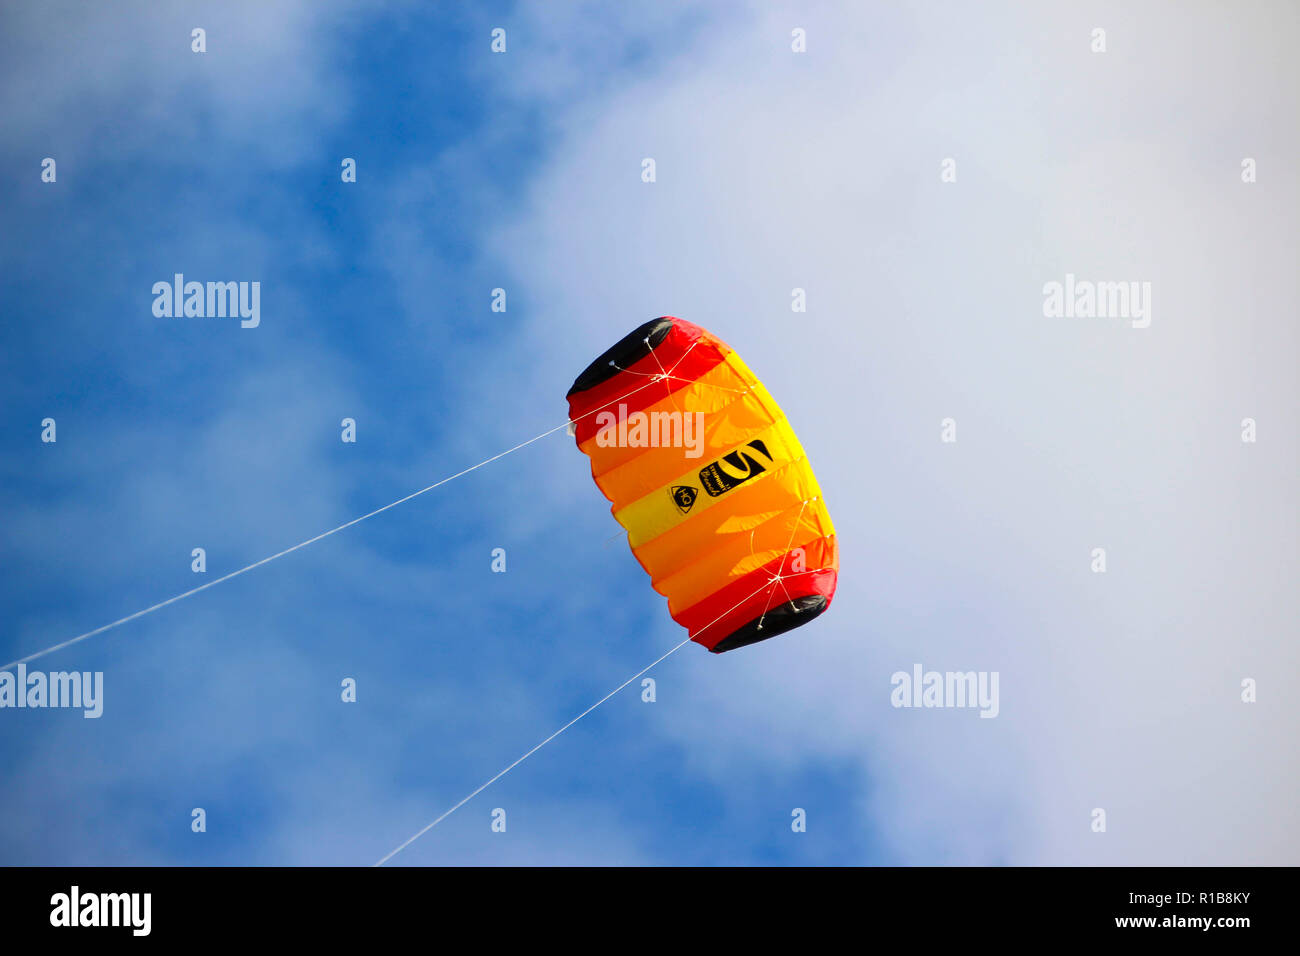 Lenkdrachen am blauen Himmel mit einigen Wolken. Fly a kite n a blue sky with a few nice clouds. Stock Photo